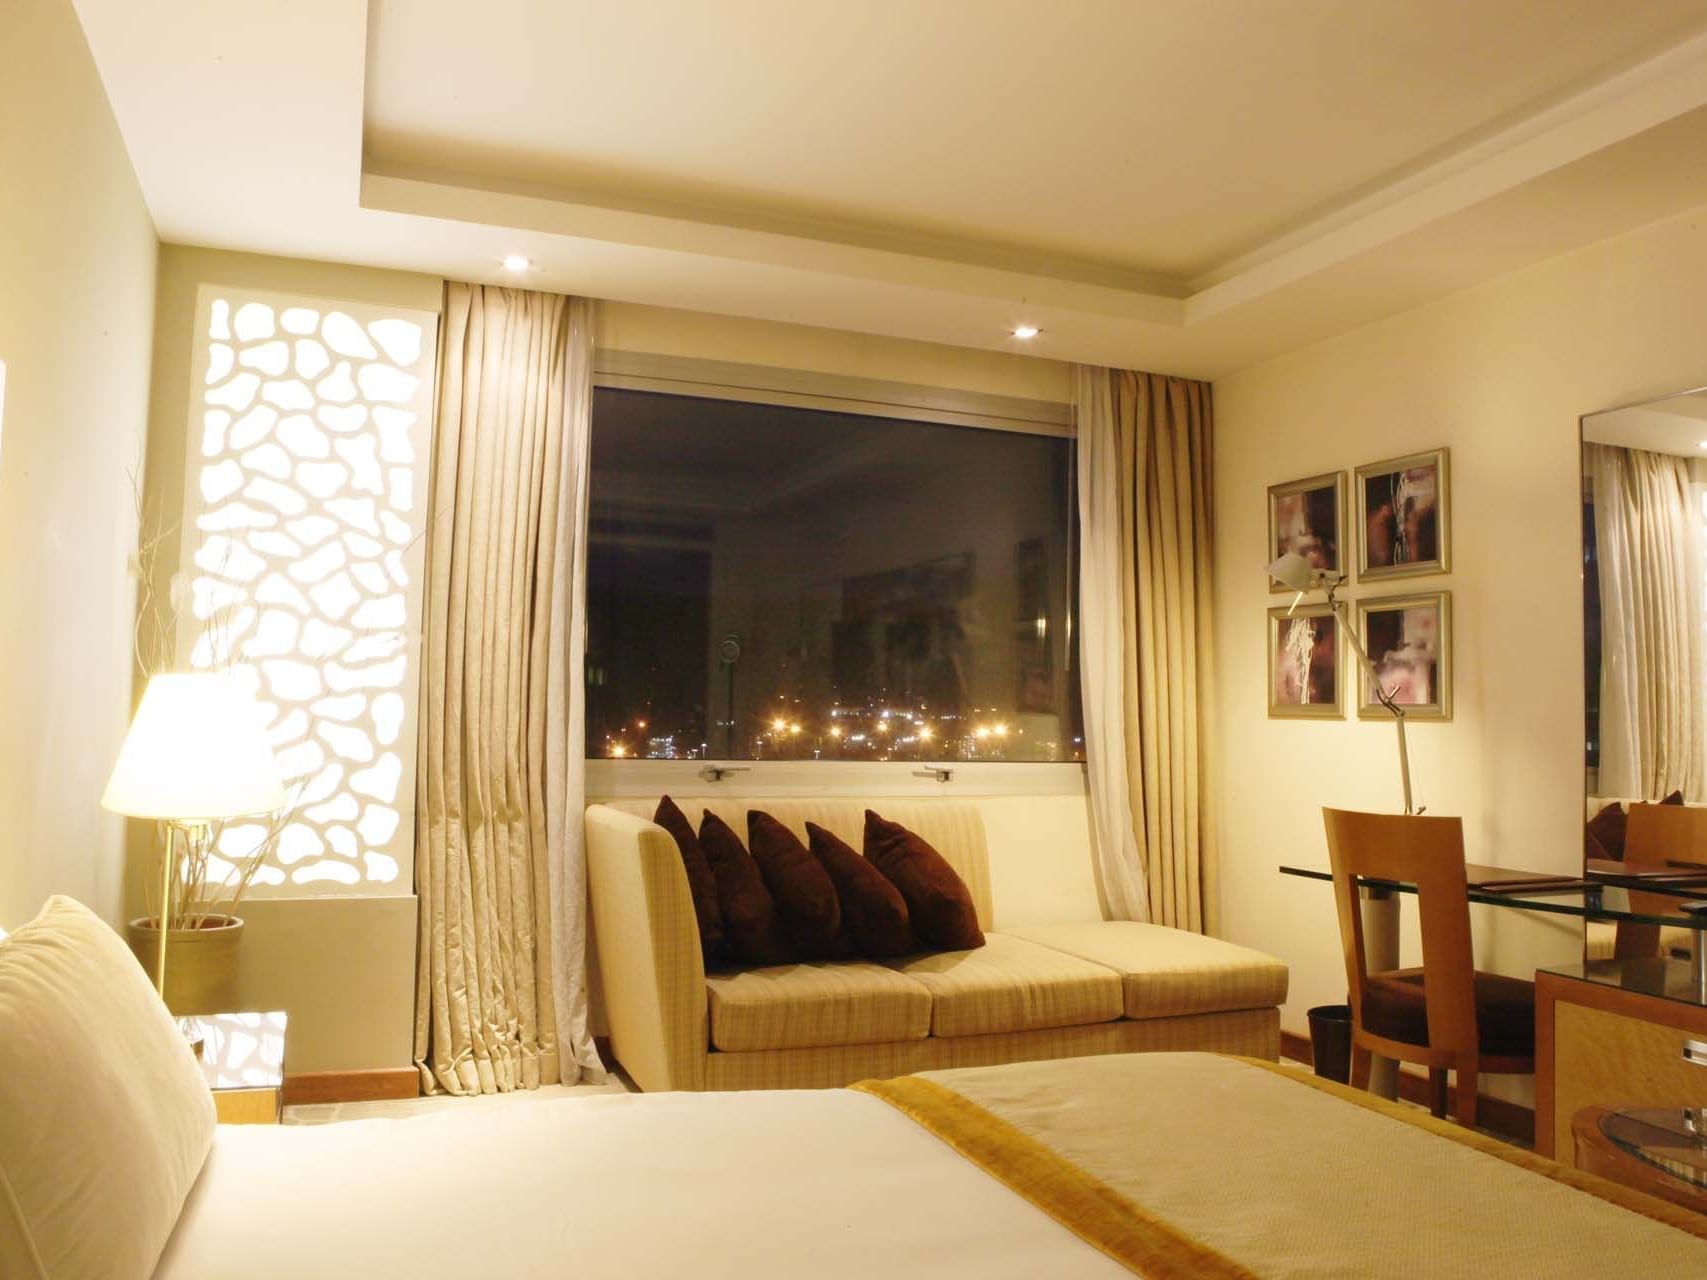 Bedroom with a large Window -  Farah Casablanca Hotel 